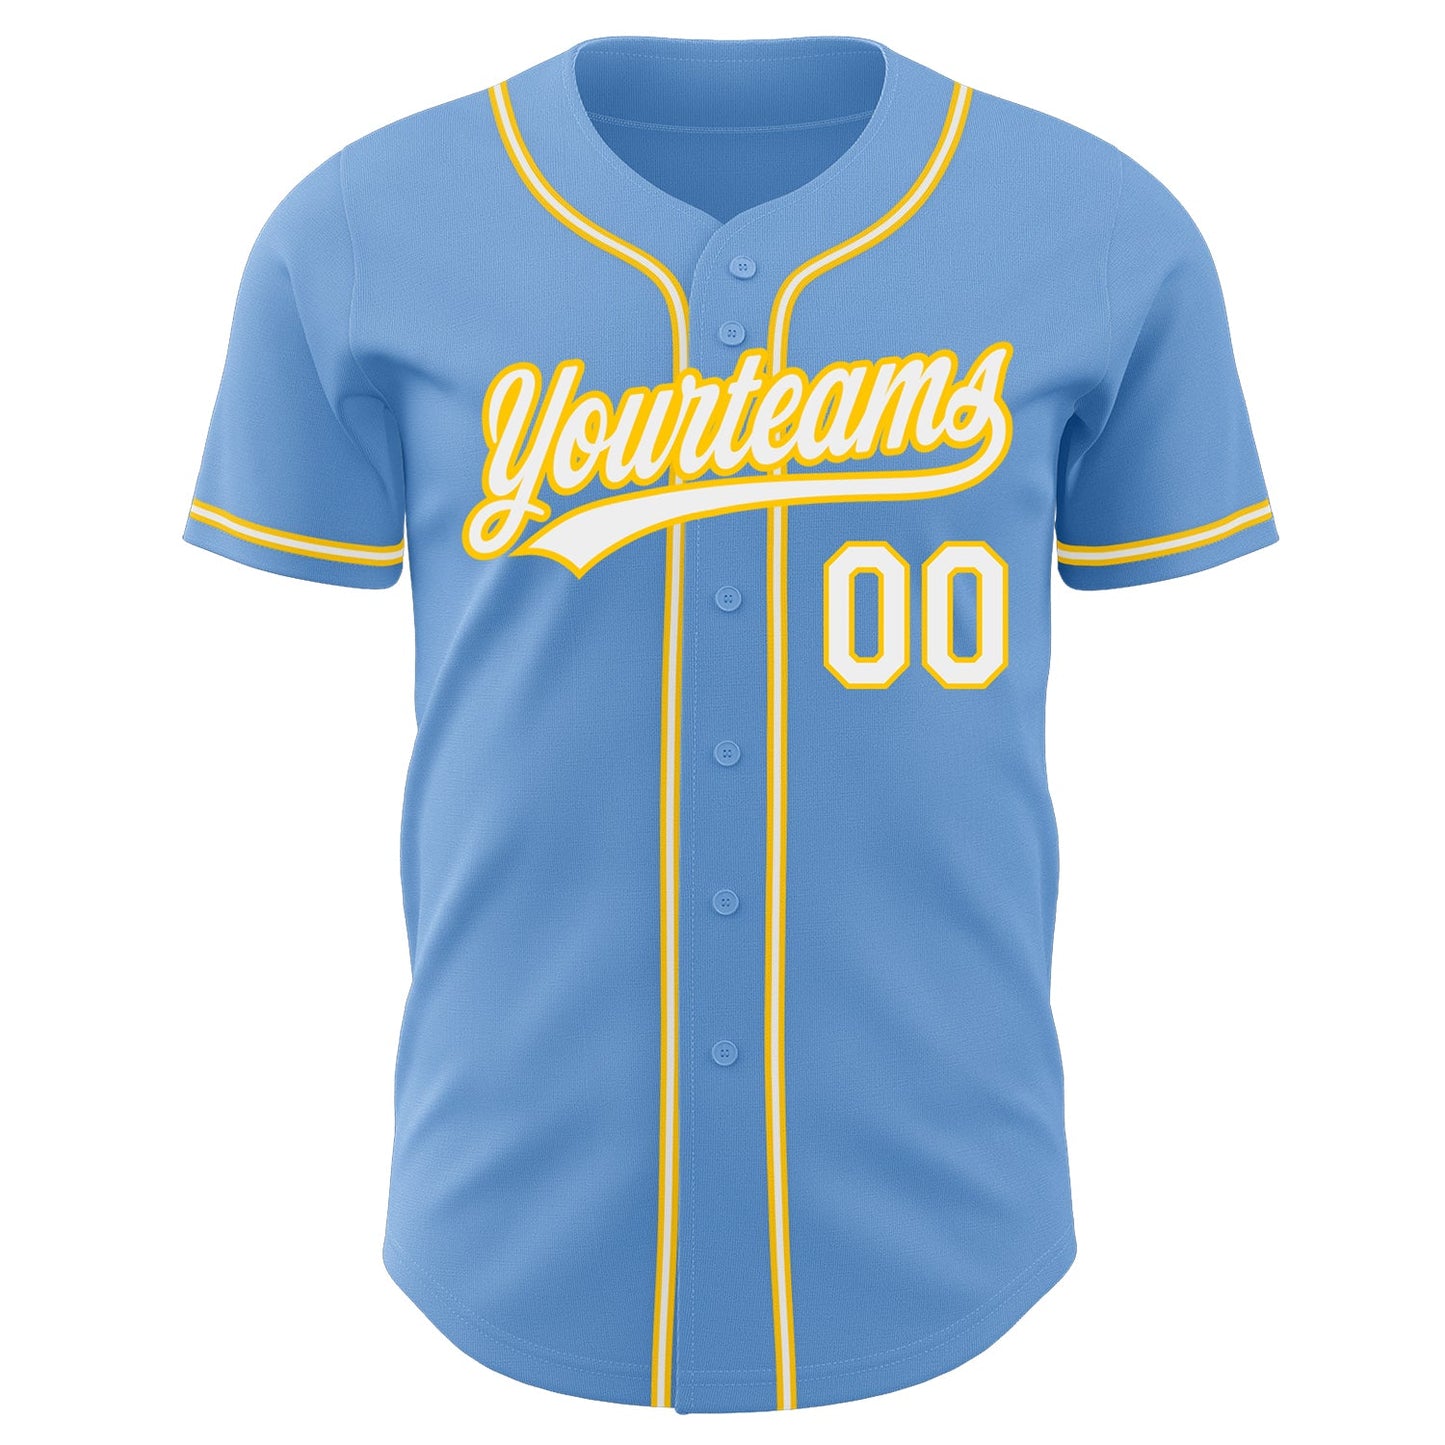 Custom Light Blue White-Gold Authentic Baseball Jersey